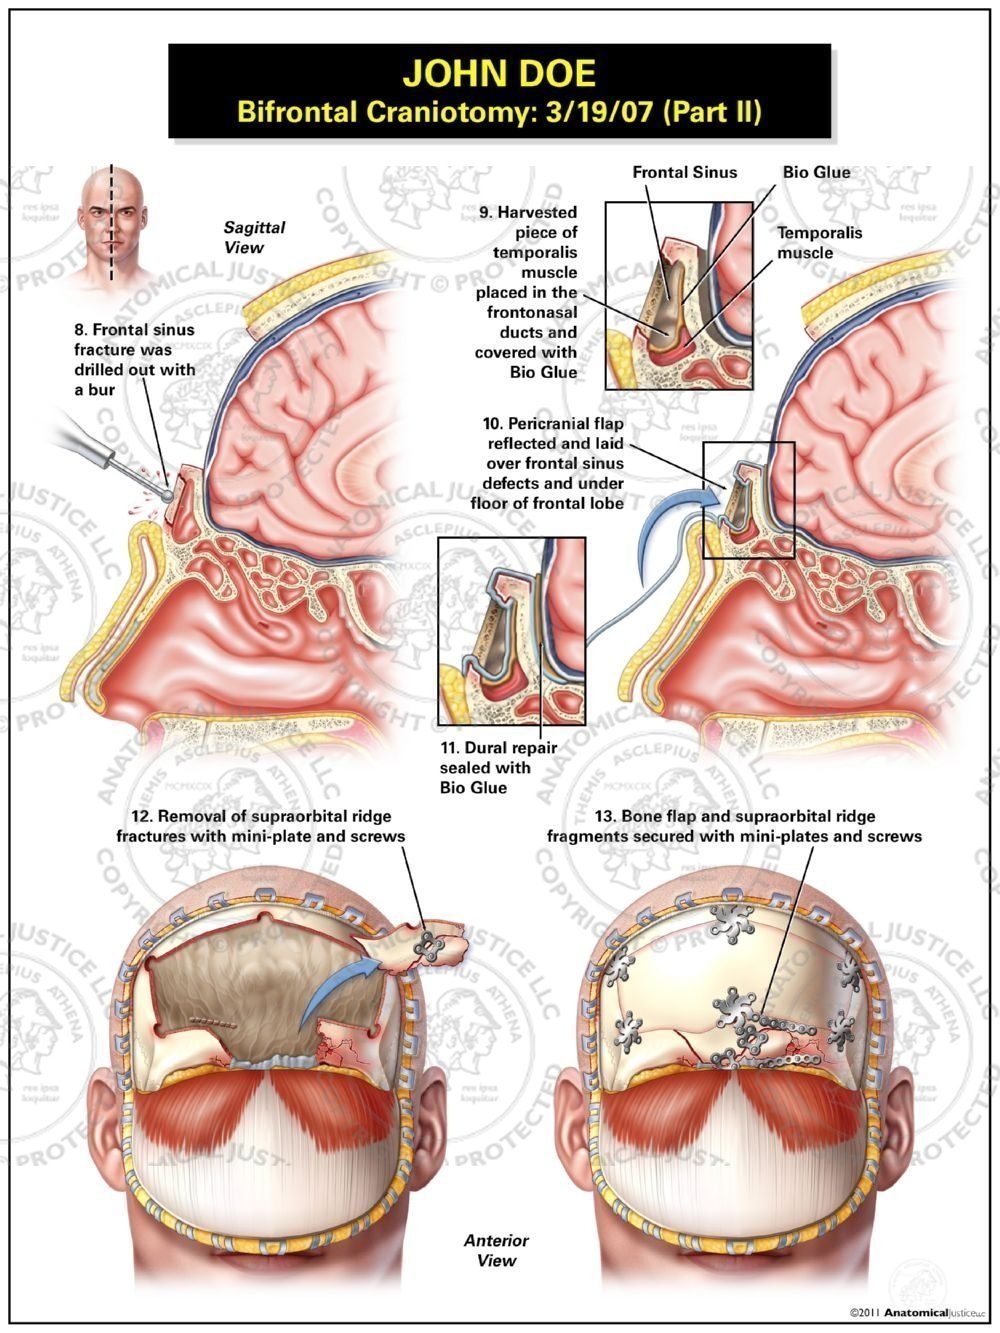 Bifrontal Craniotomy – Part II